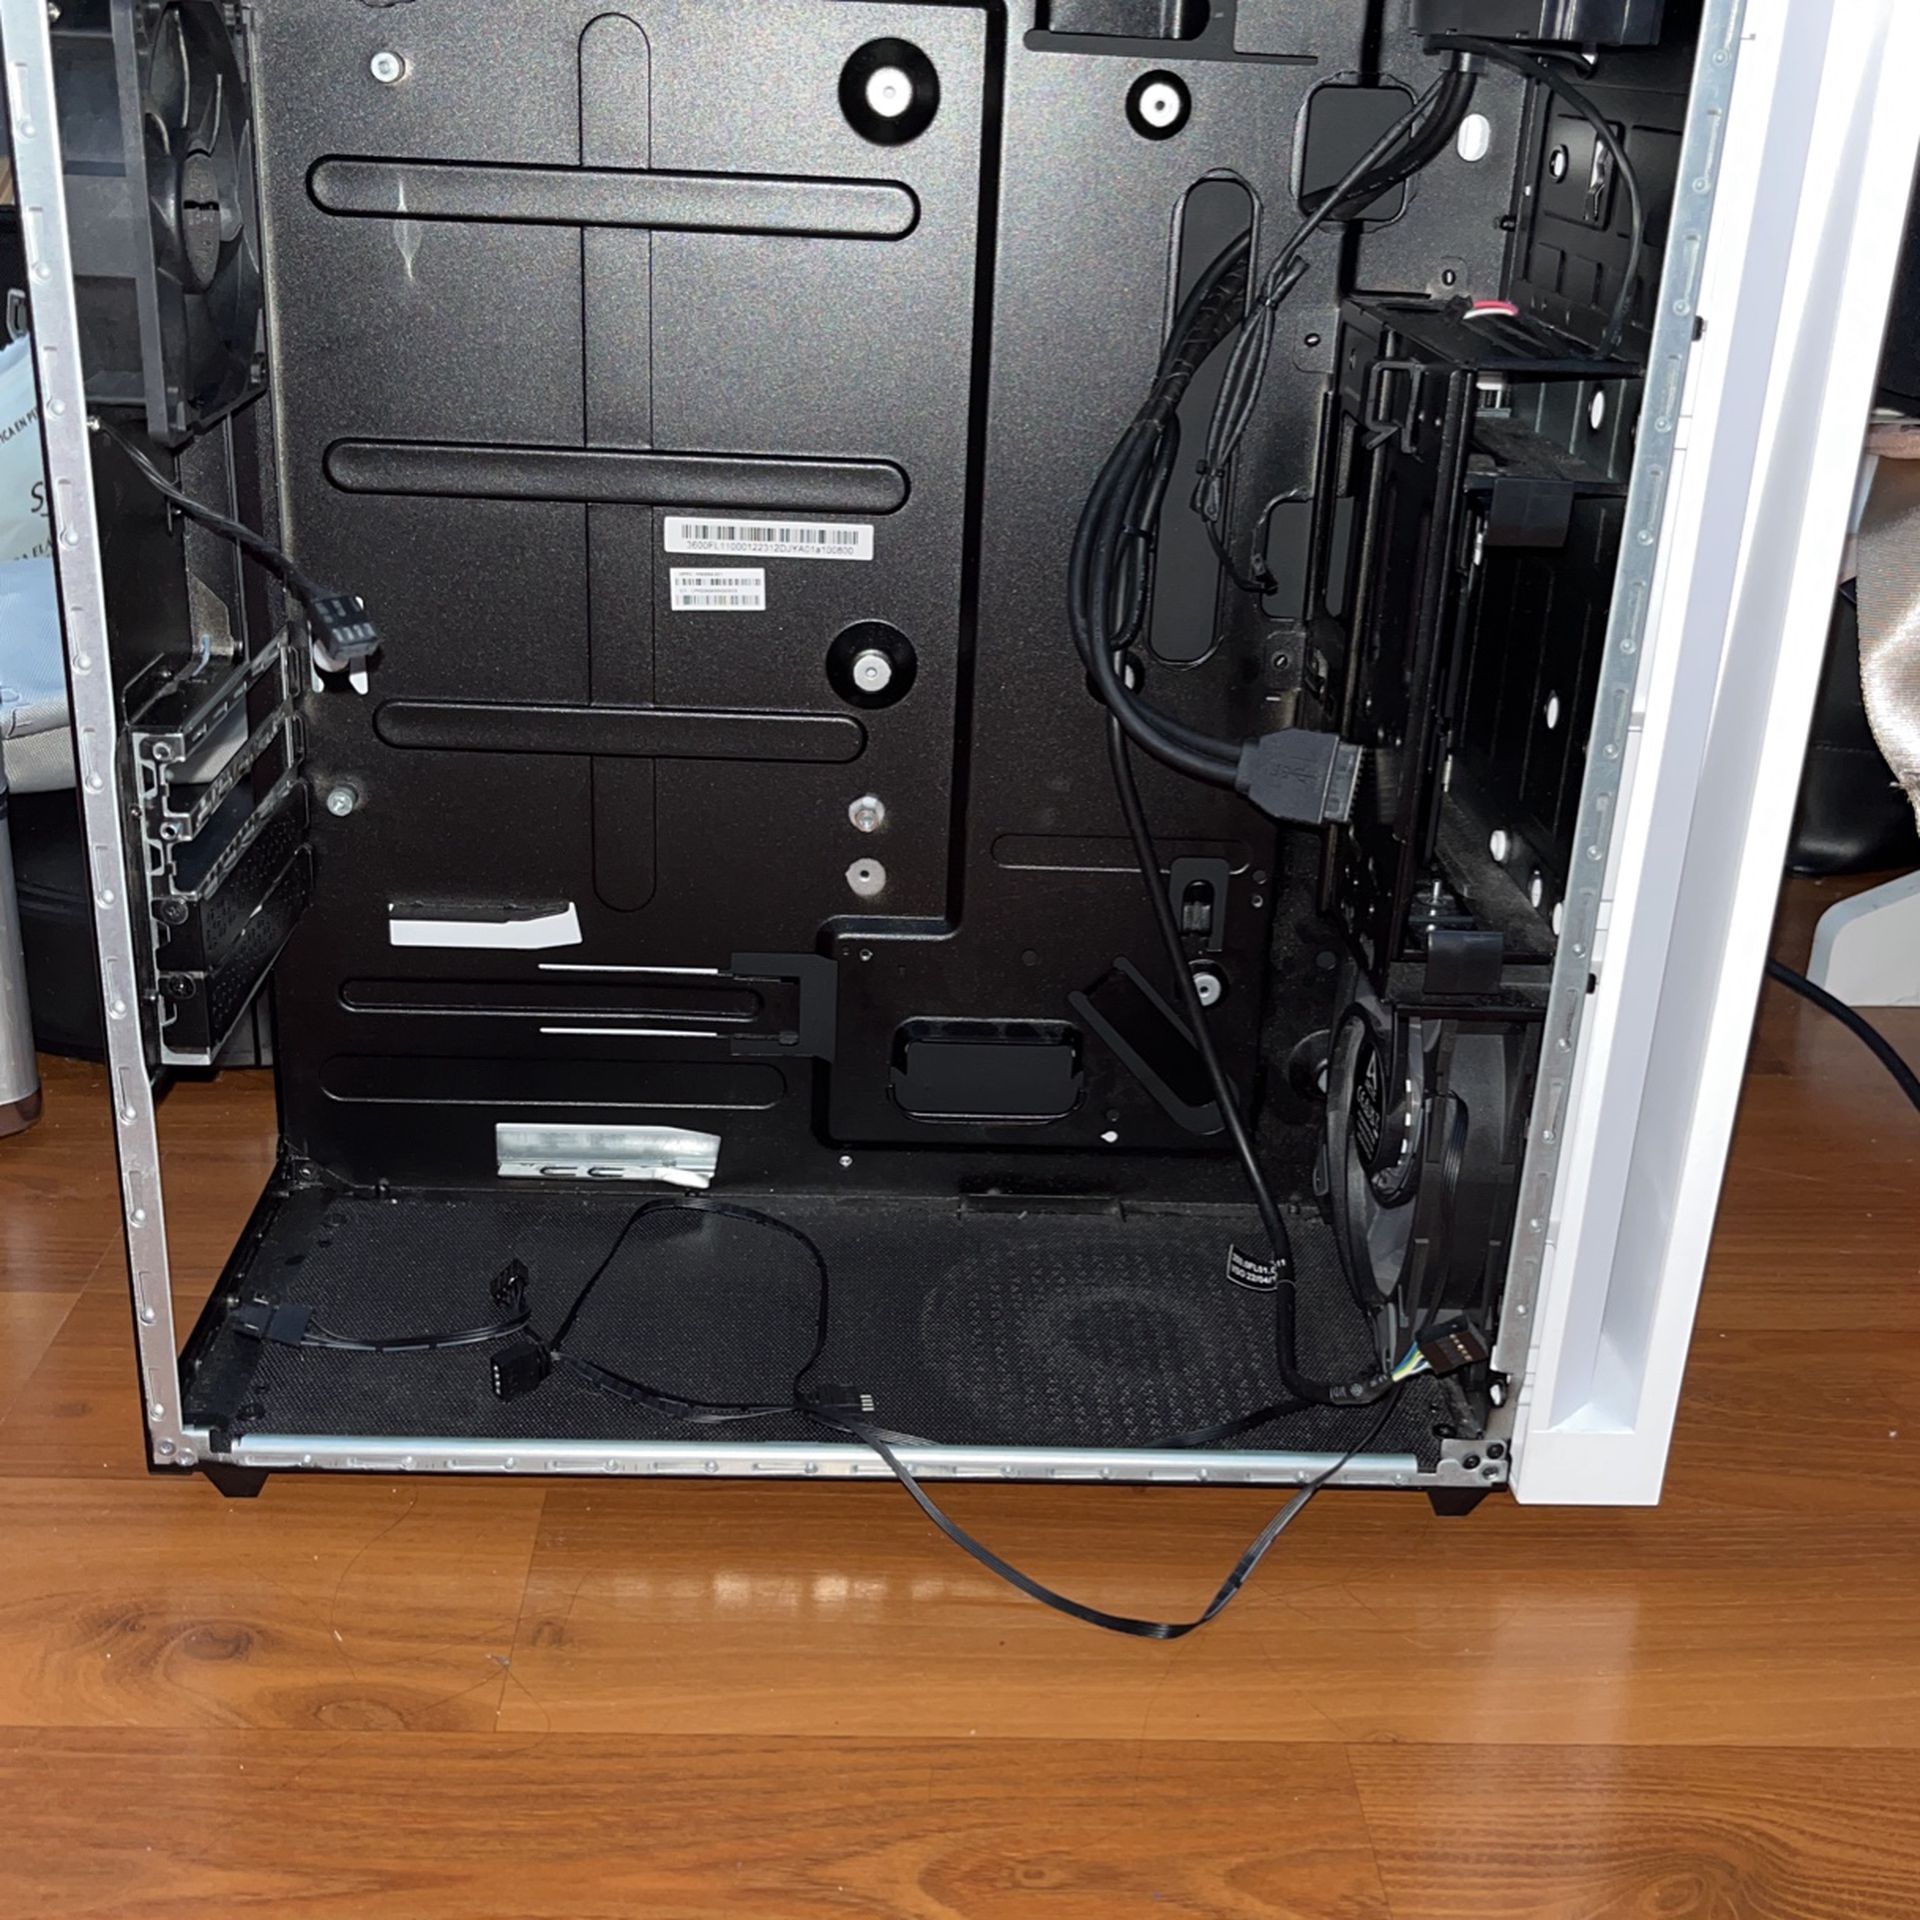 HP Omen 25L White PC Case